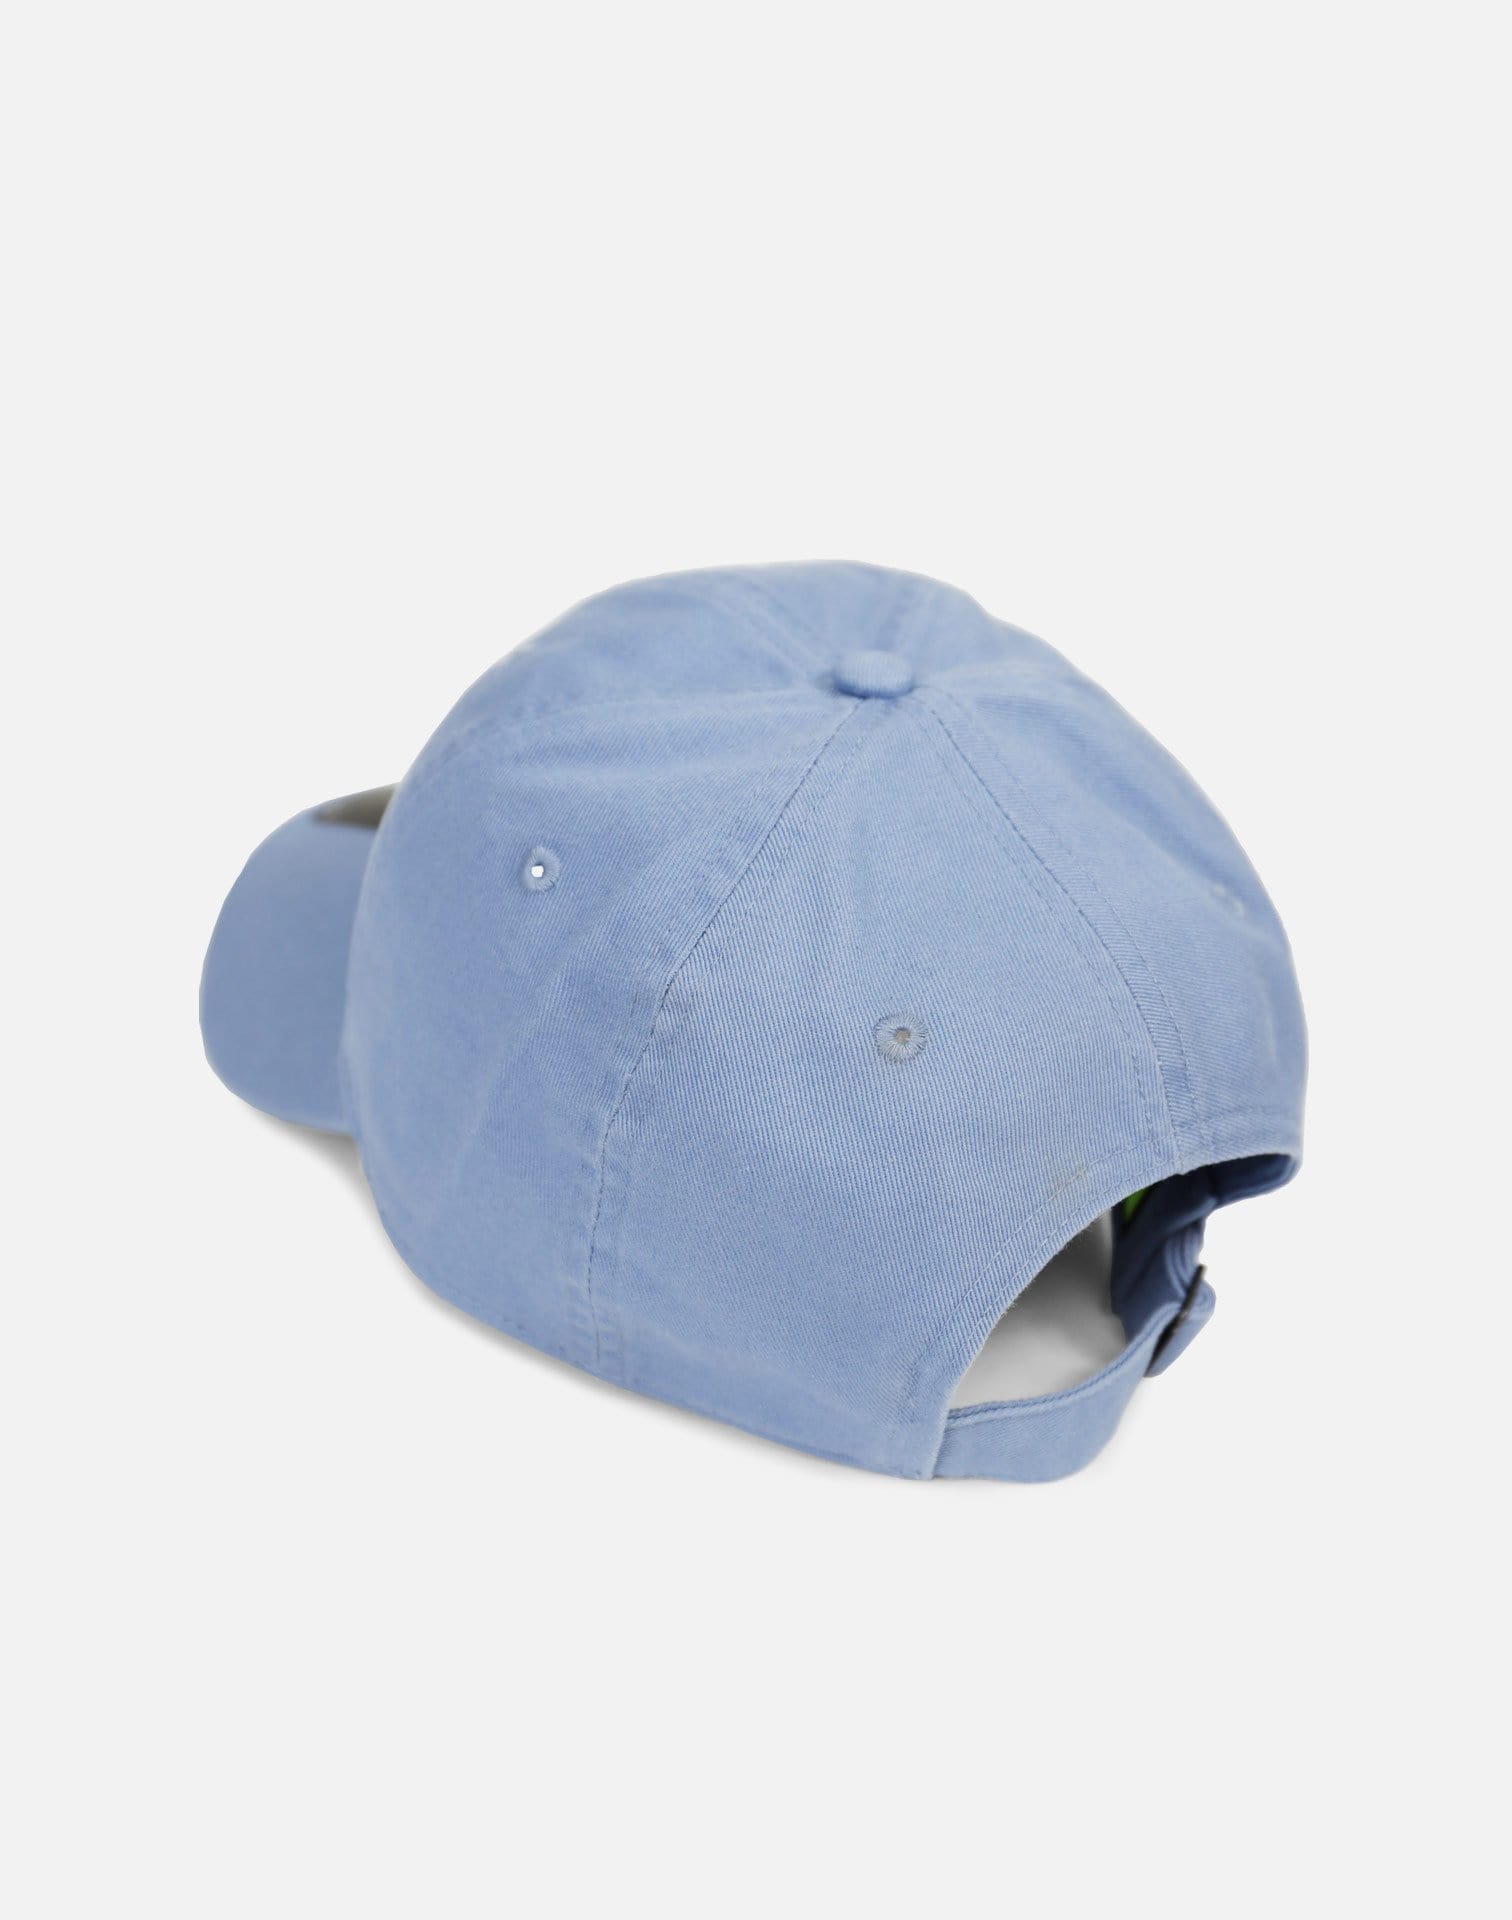 Nike Heritage '86 Futura Hat (Ice Blue)